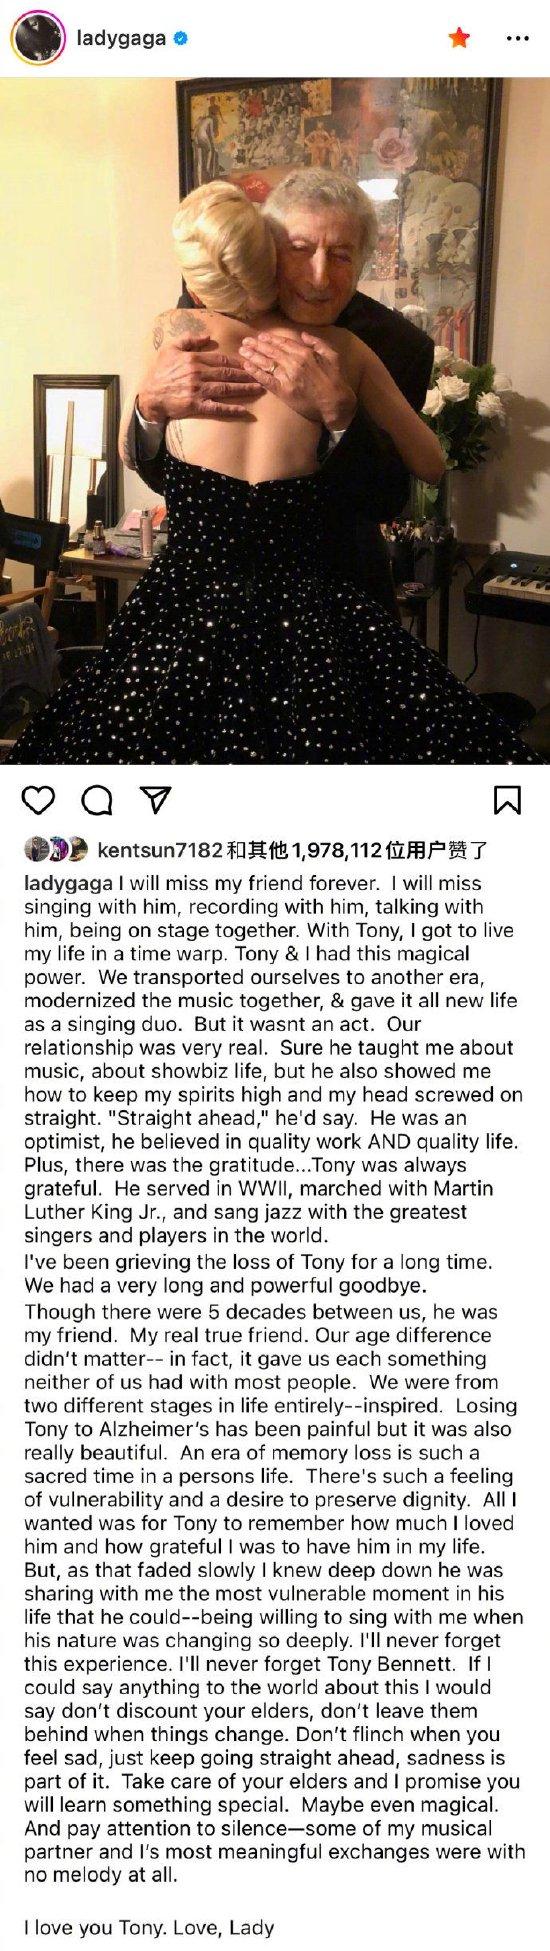 Ladygaga发文缅怀Tony Bennett 向其表示感谢